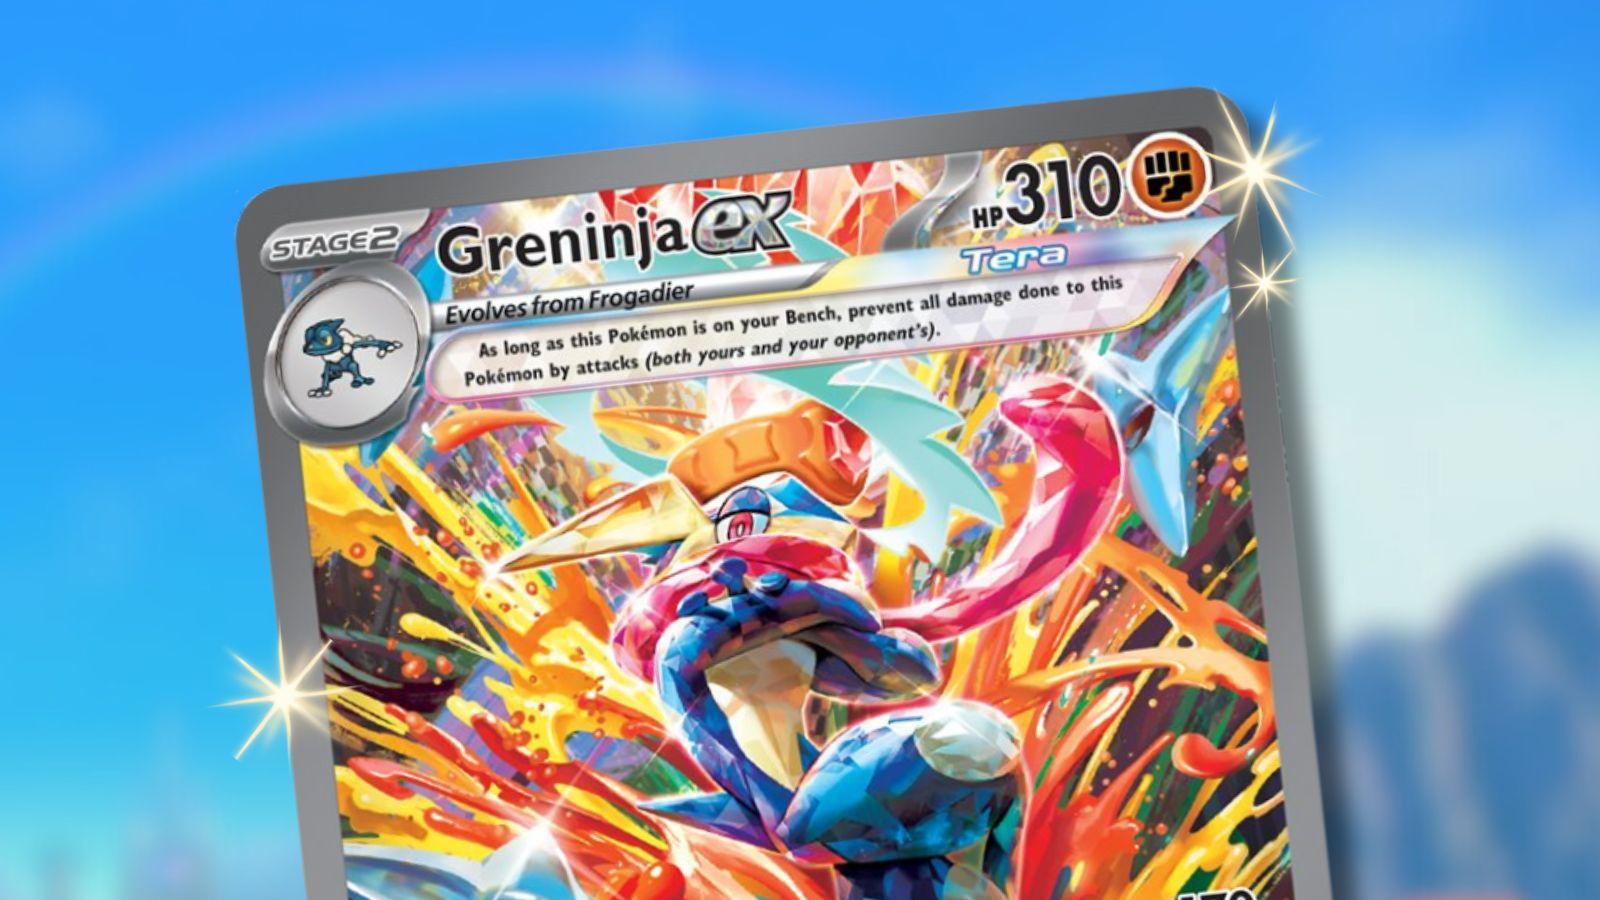 Greninja ex Pokemon card with sky game background.